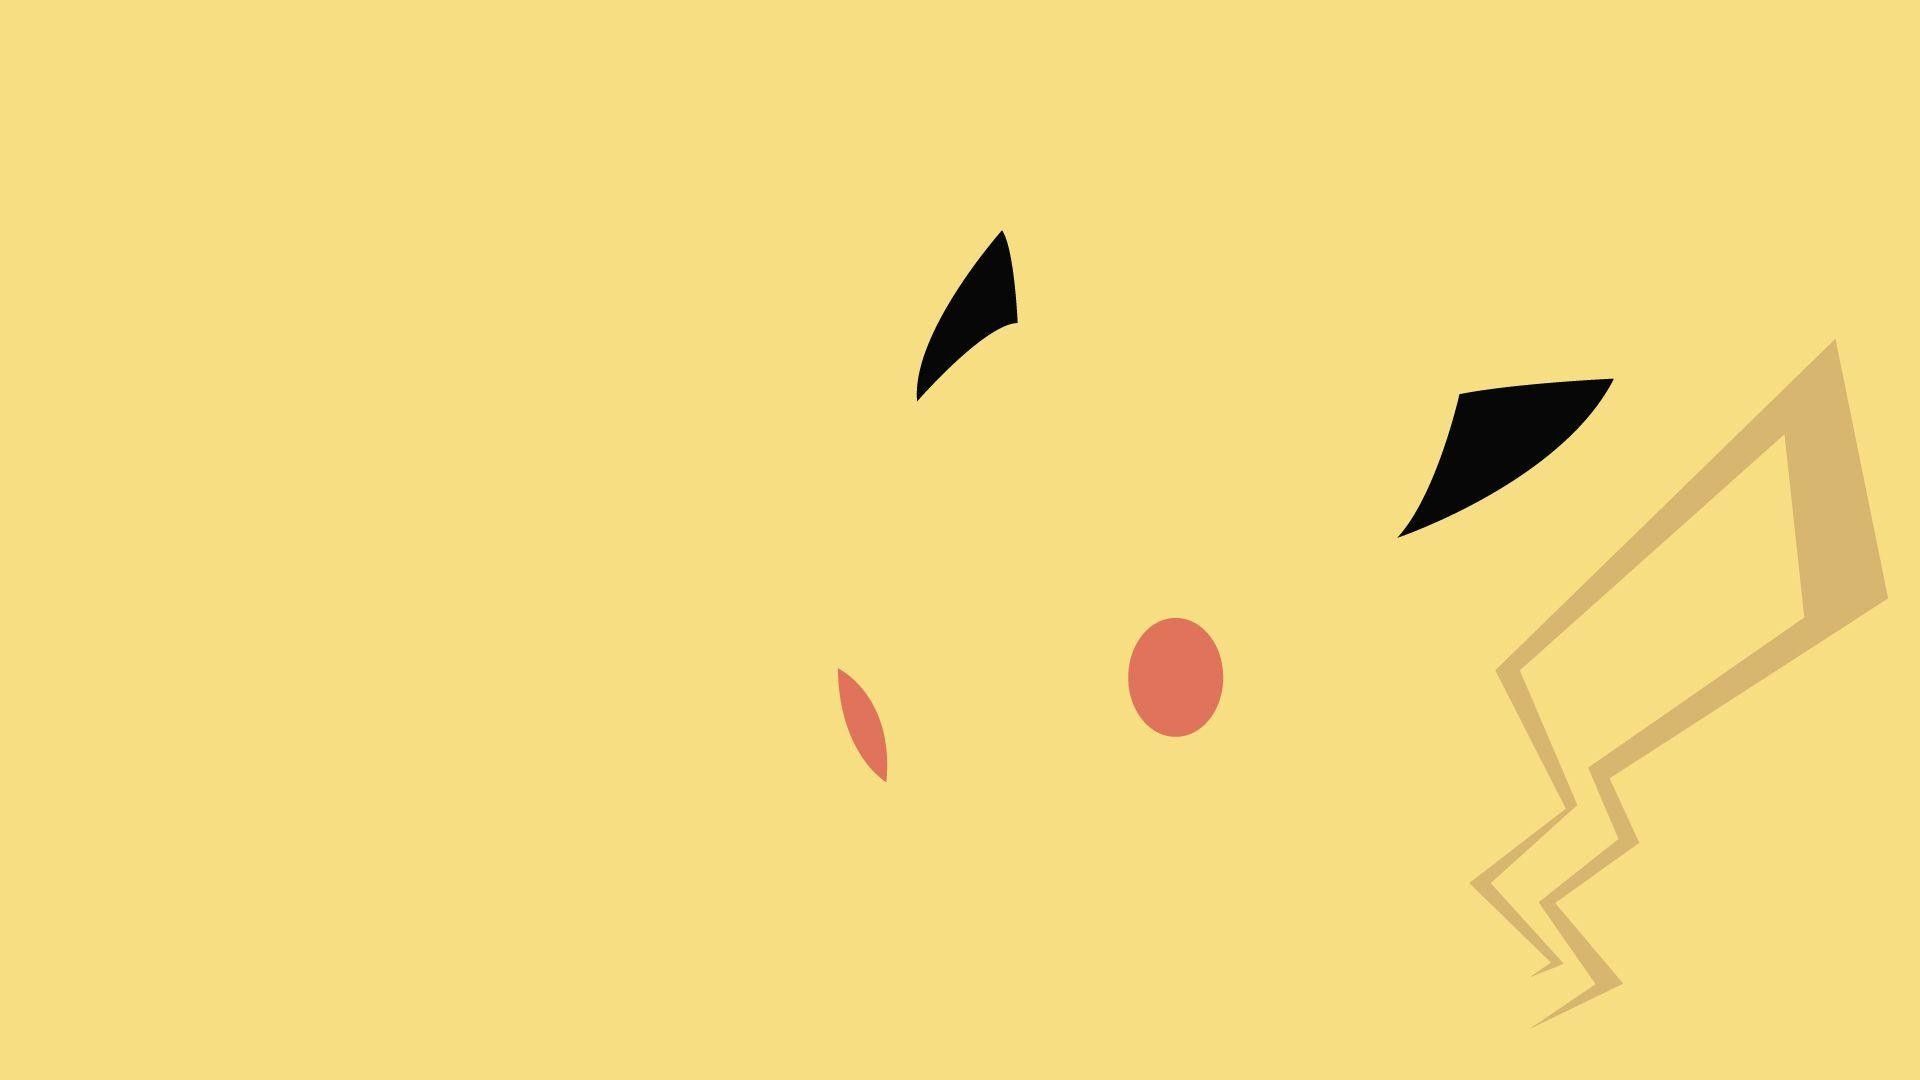 A minimalist wallpaper of Pikachu from the Pokemon franchise - Pikachu